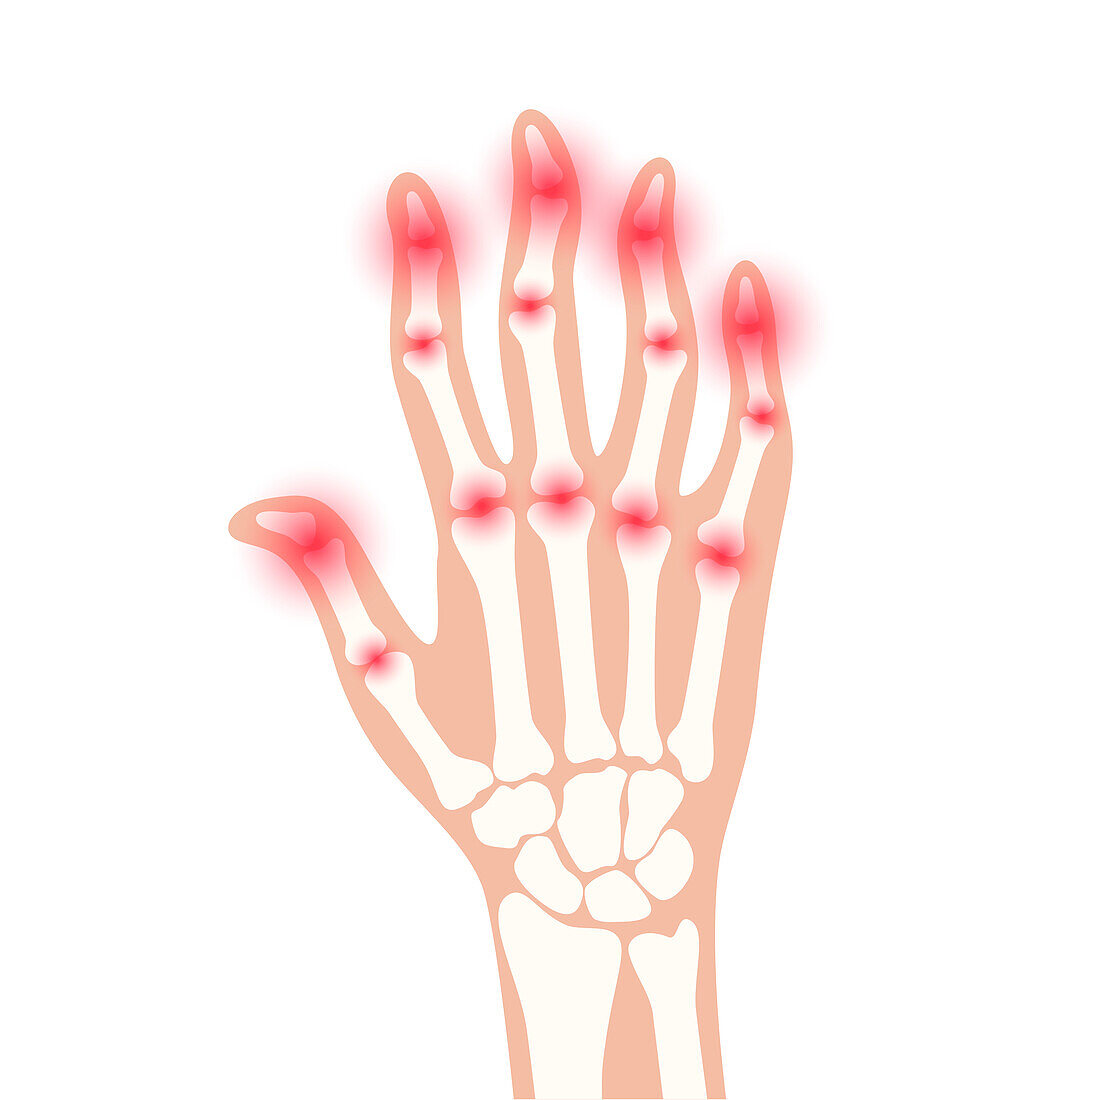 Arthritic hand, conceptual illustration